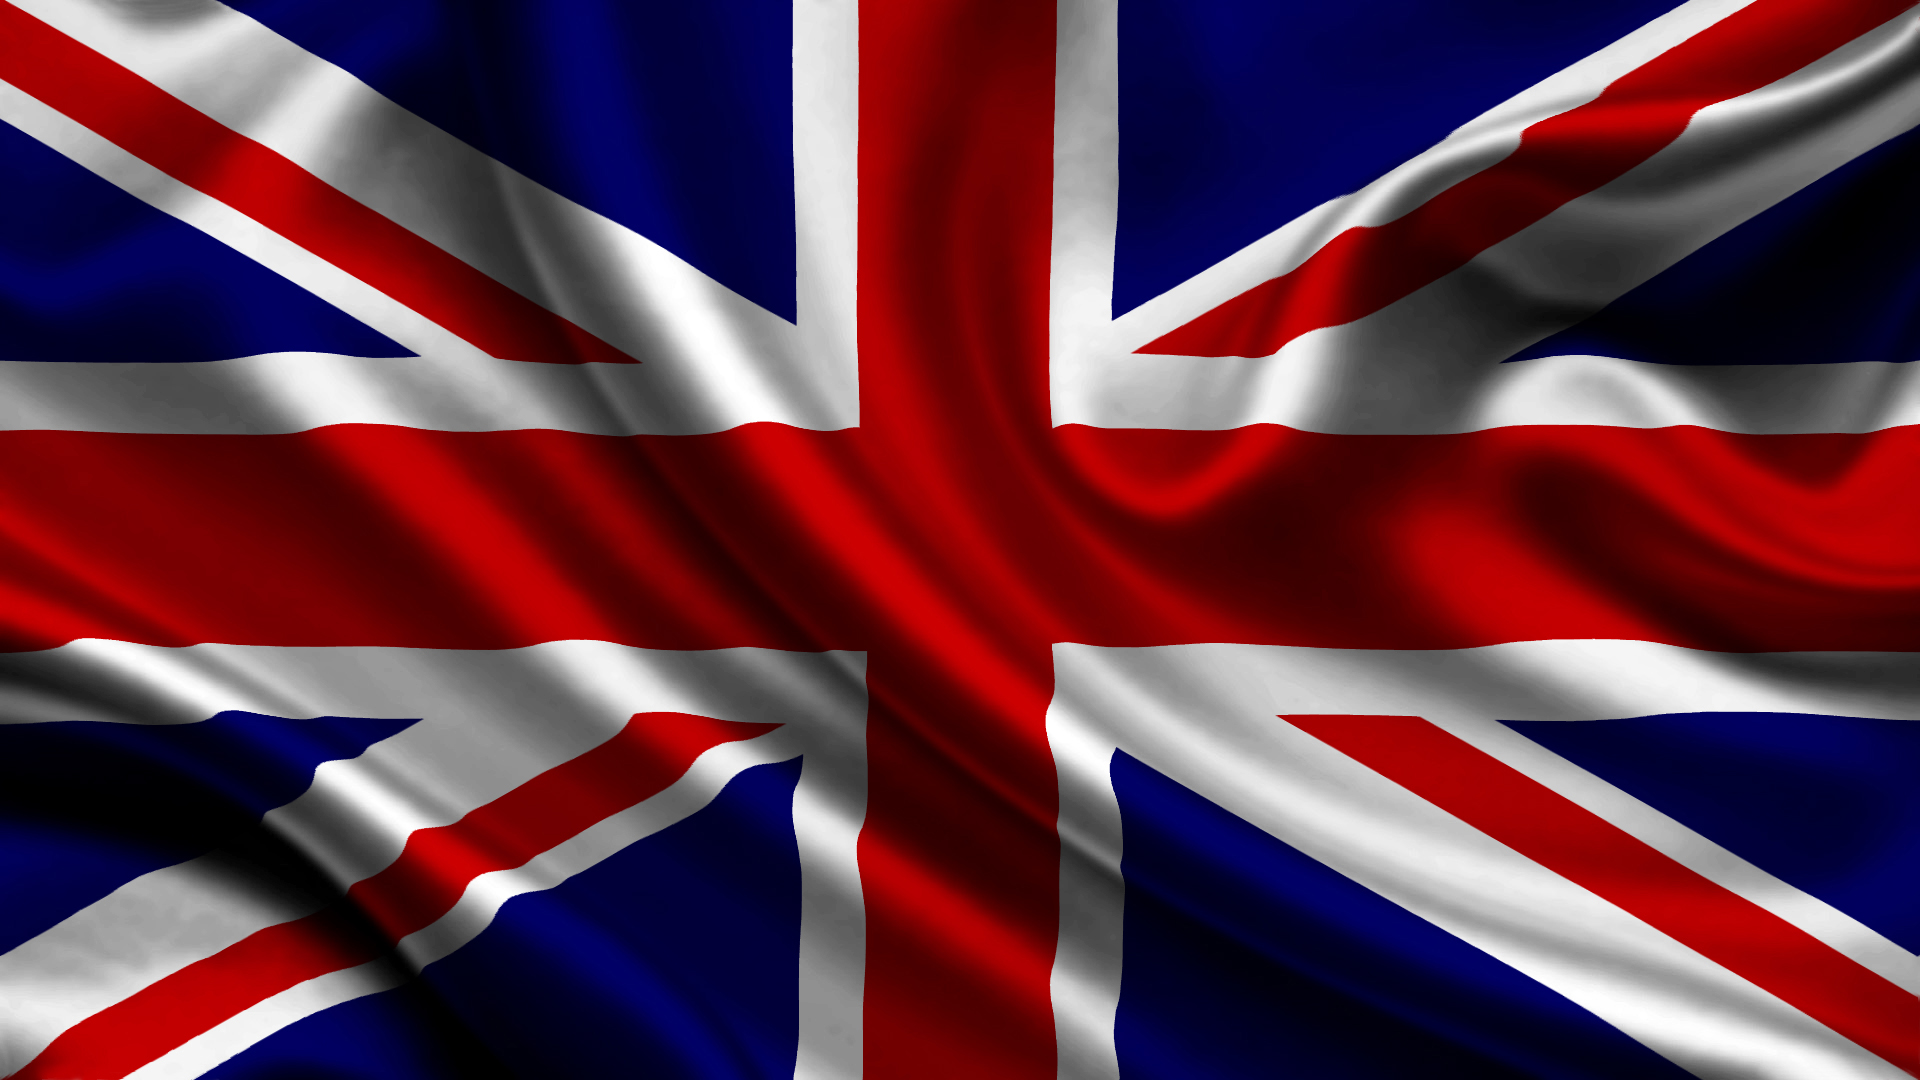 флаг великобритании герб великобритании